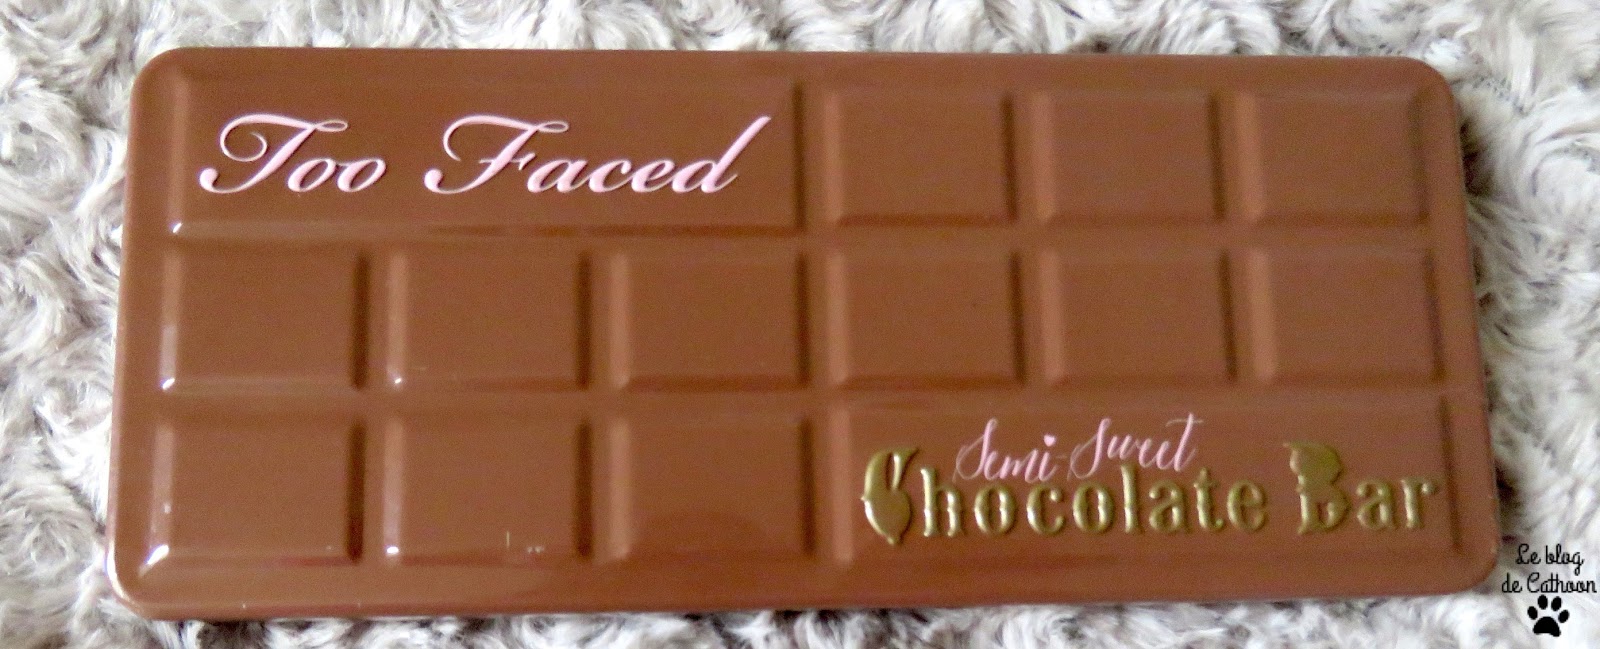 Semi-Sweet Chocolate Bar - Too Faced